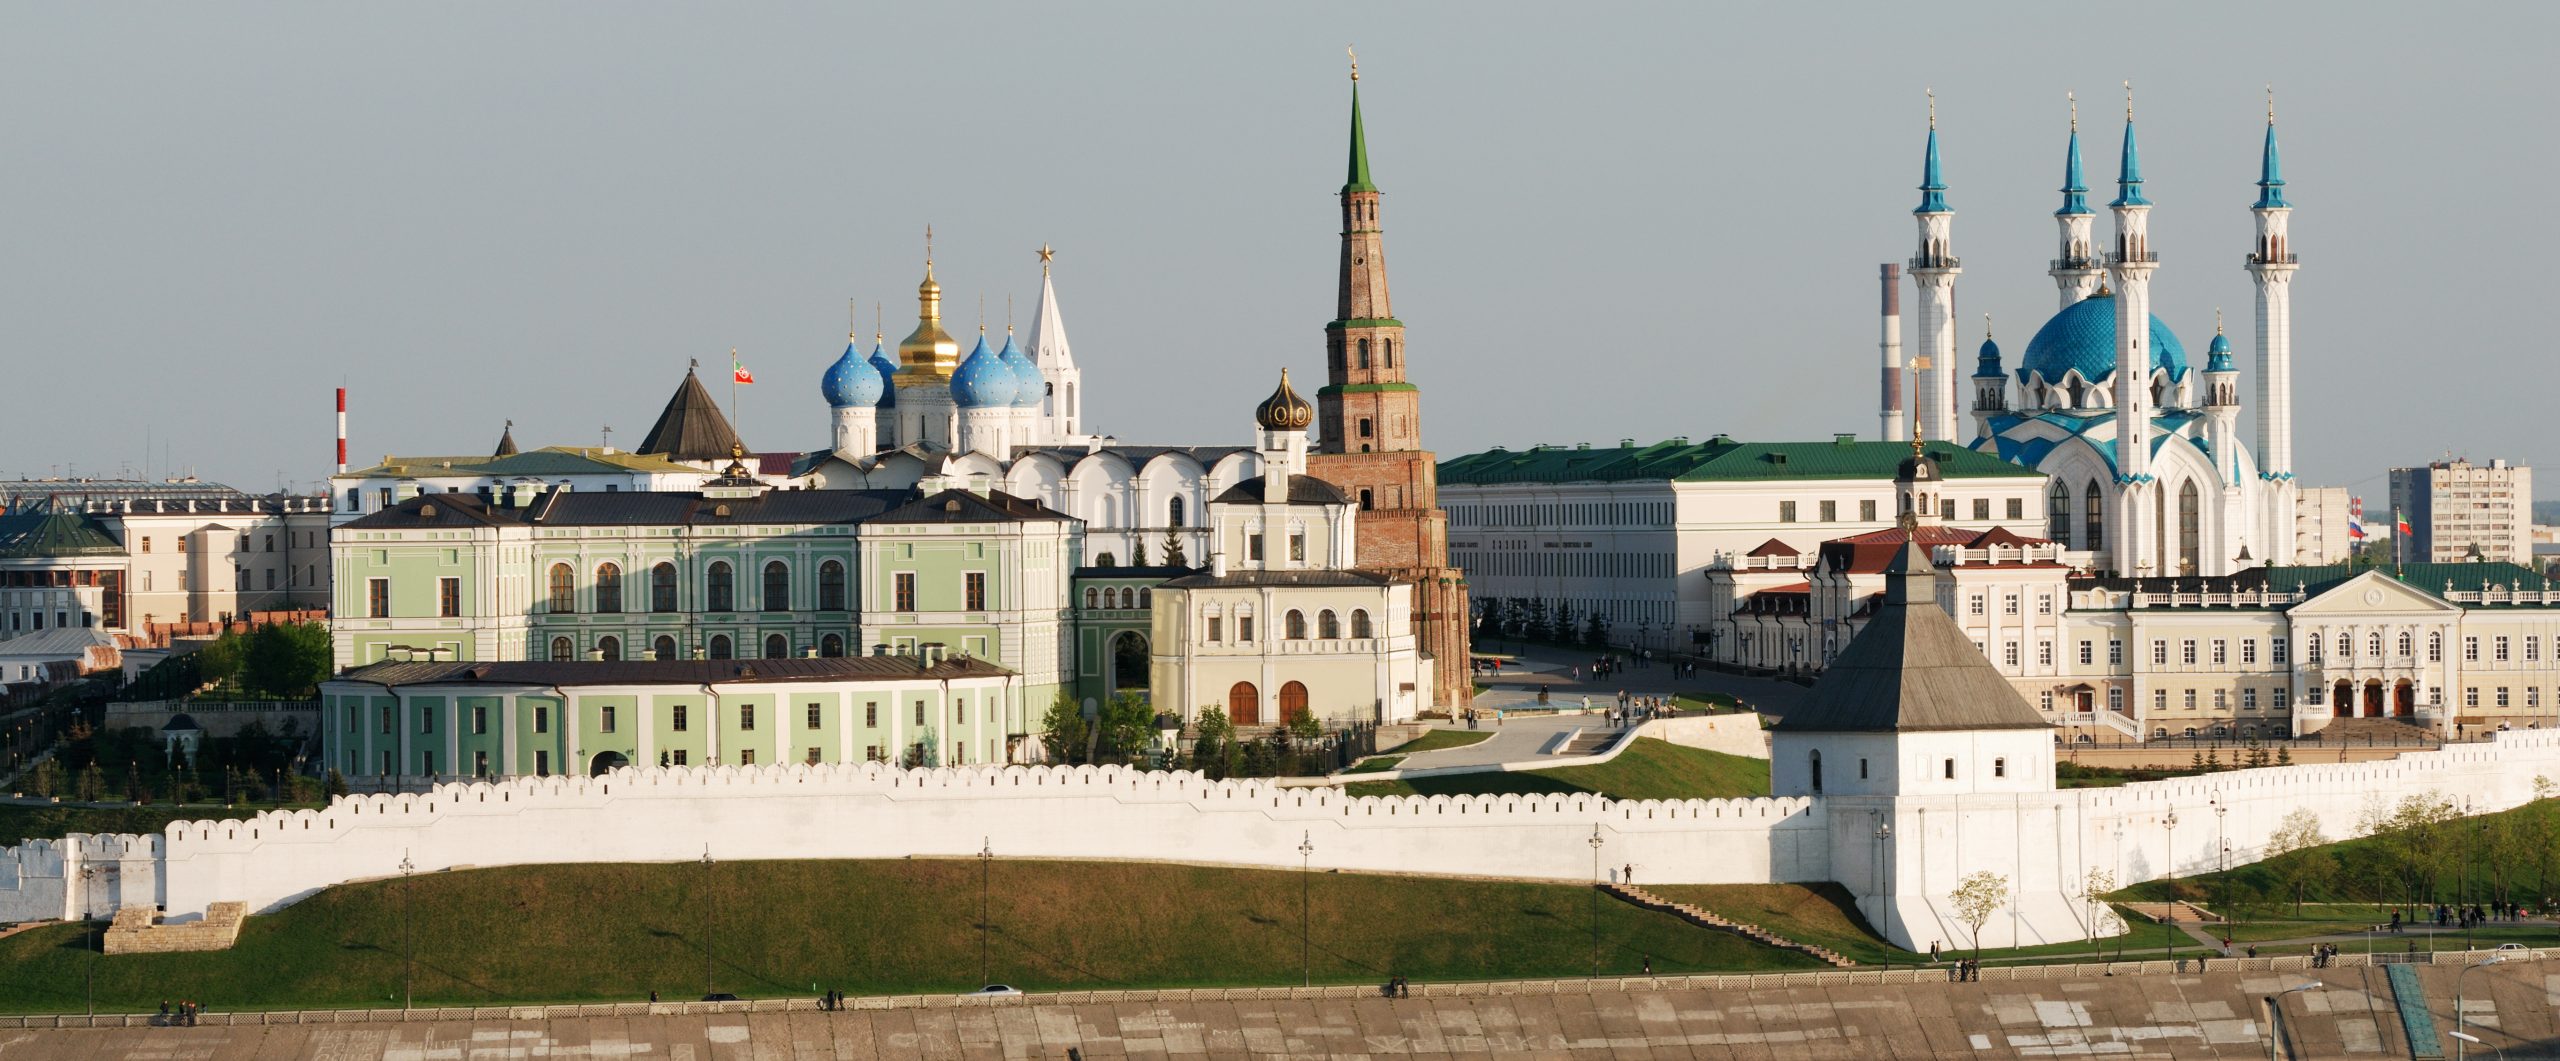 Кремль казань фото внутри и снаружи